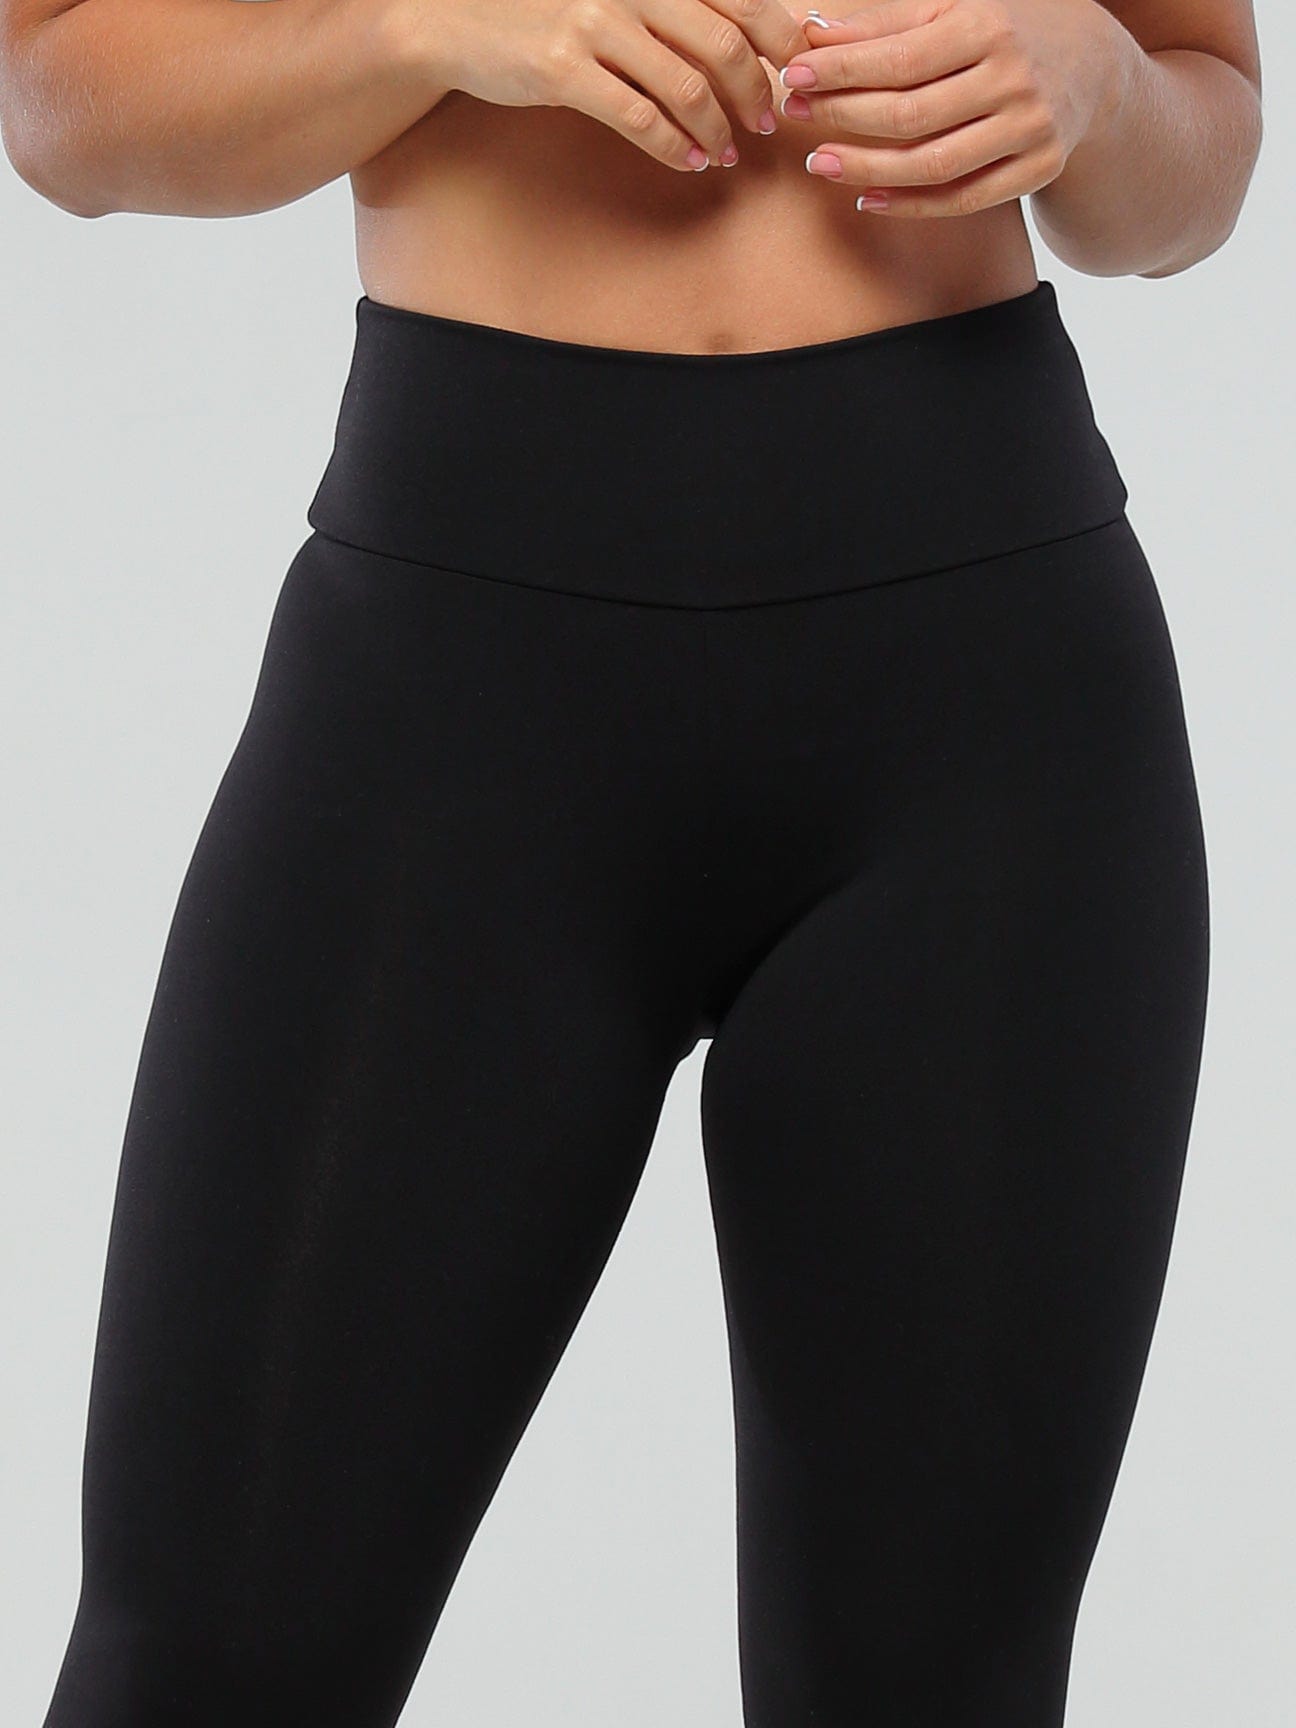 JGGSPWM Shapewear for Women Tummy Control Butt Lifter High Waist Panty  Compression Shorts Waist Trainer Body Shaper Hip Lift Waist Girdle Black XL  